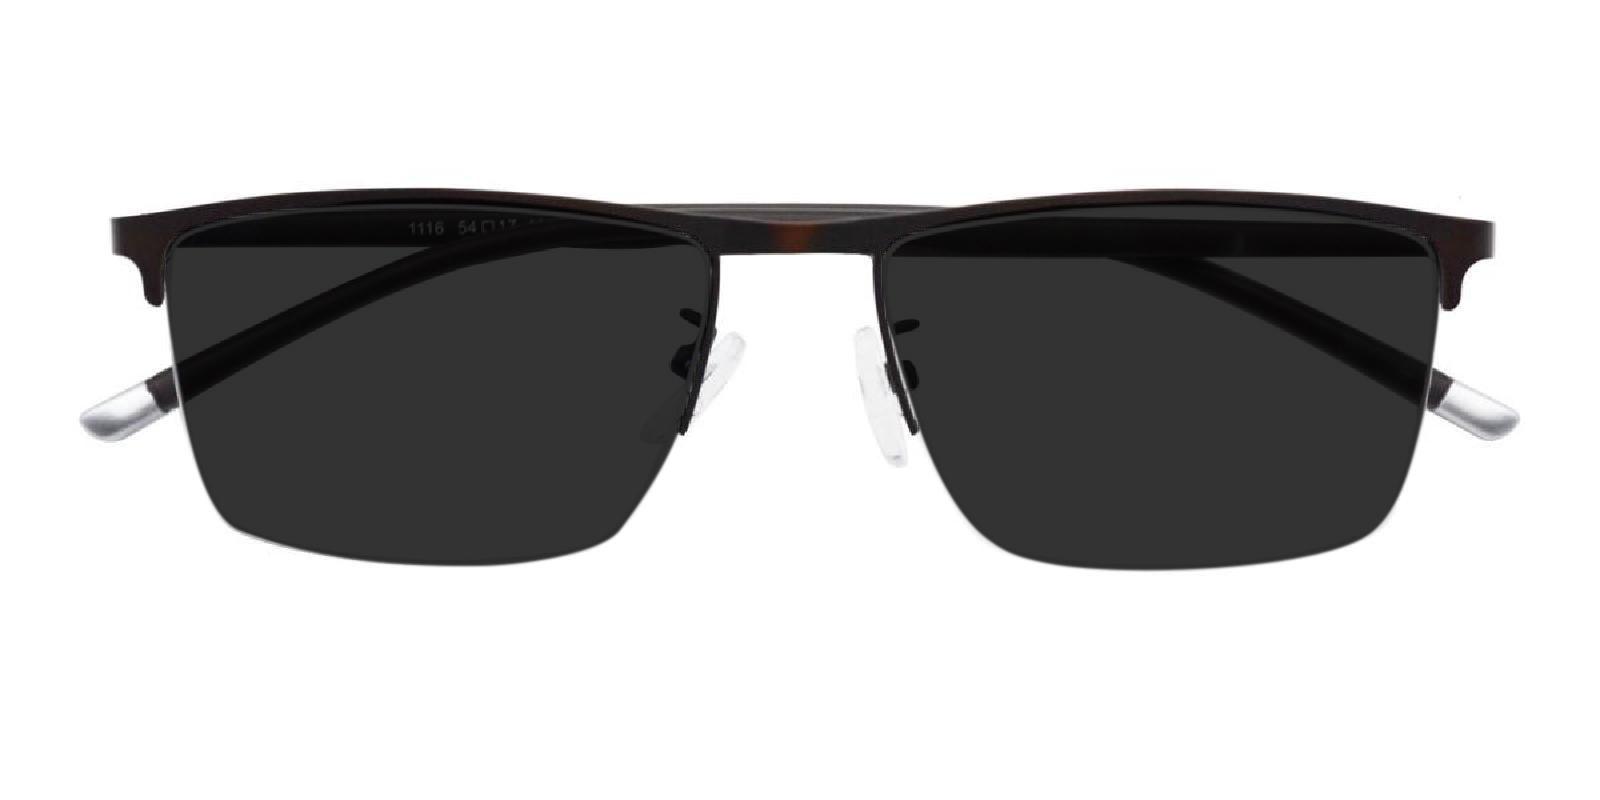 Allure Gun Metal NosePads , Sunglasses Frames from ABBE Glasses